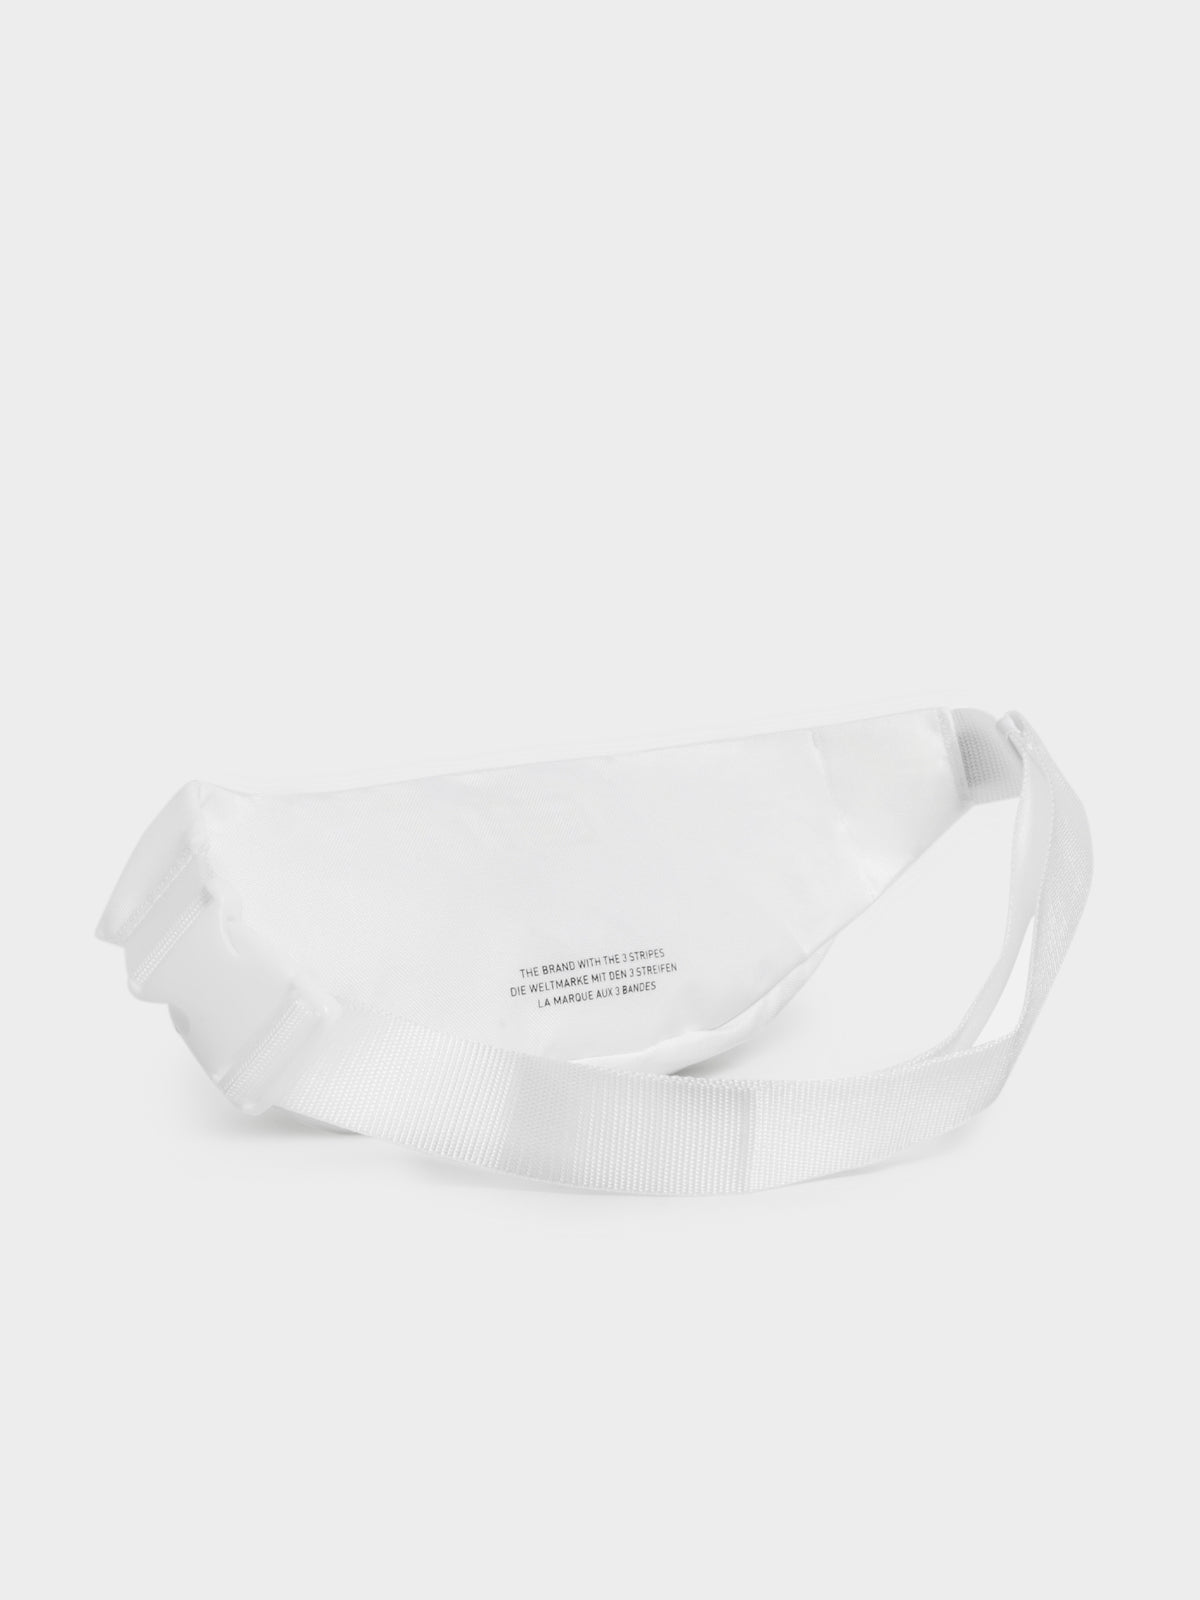 Essential Cross Body Bag in White